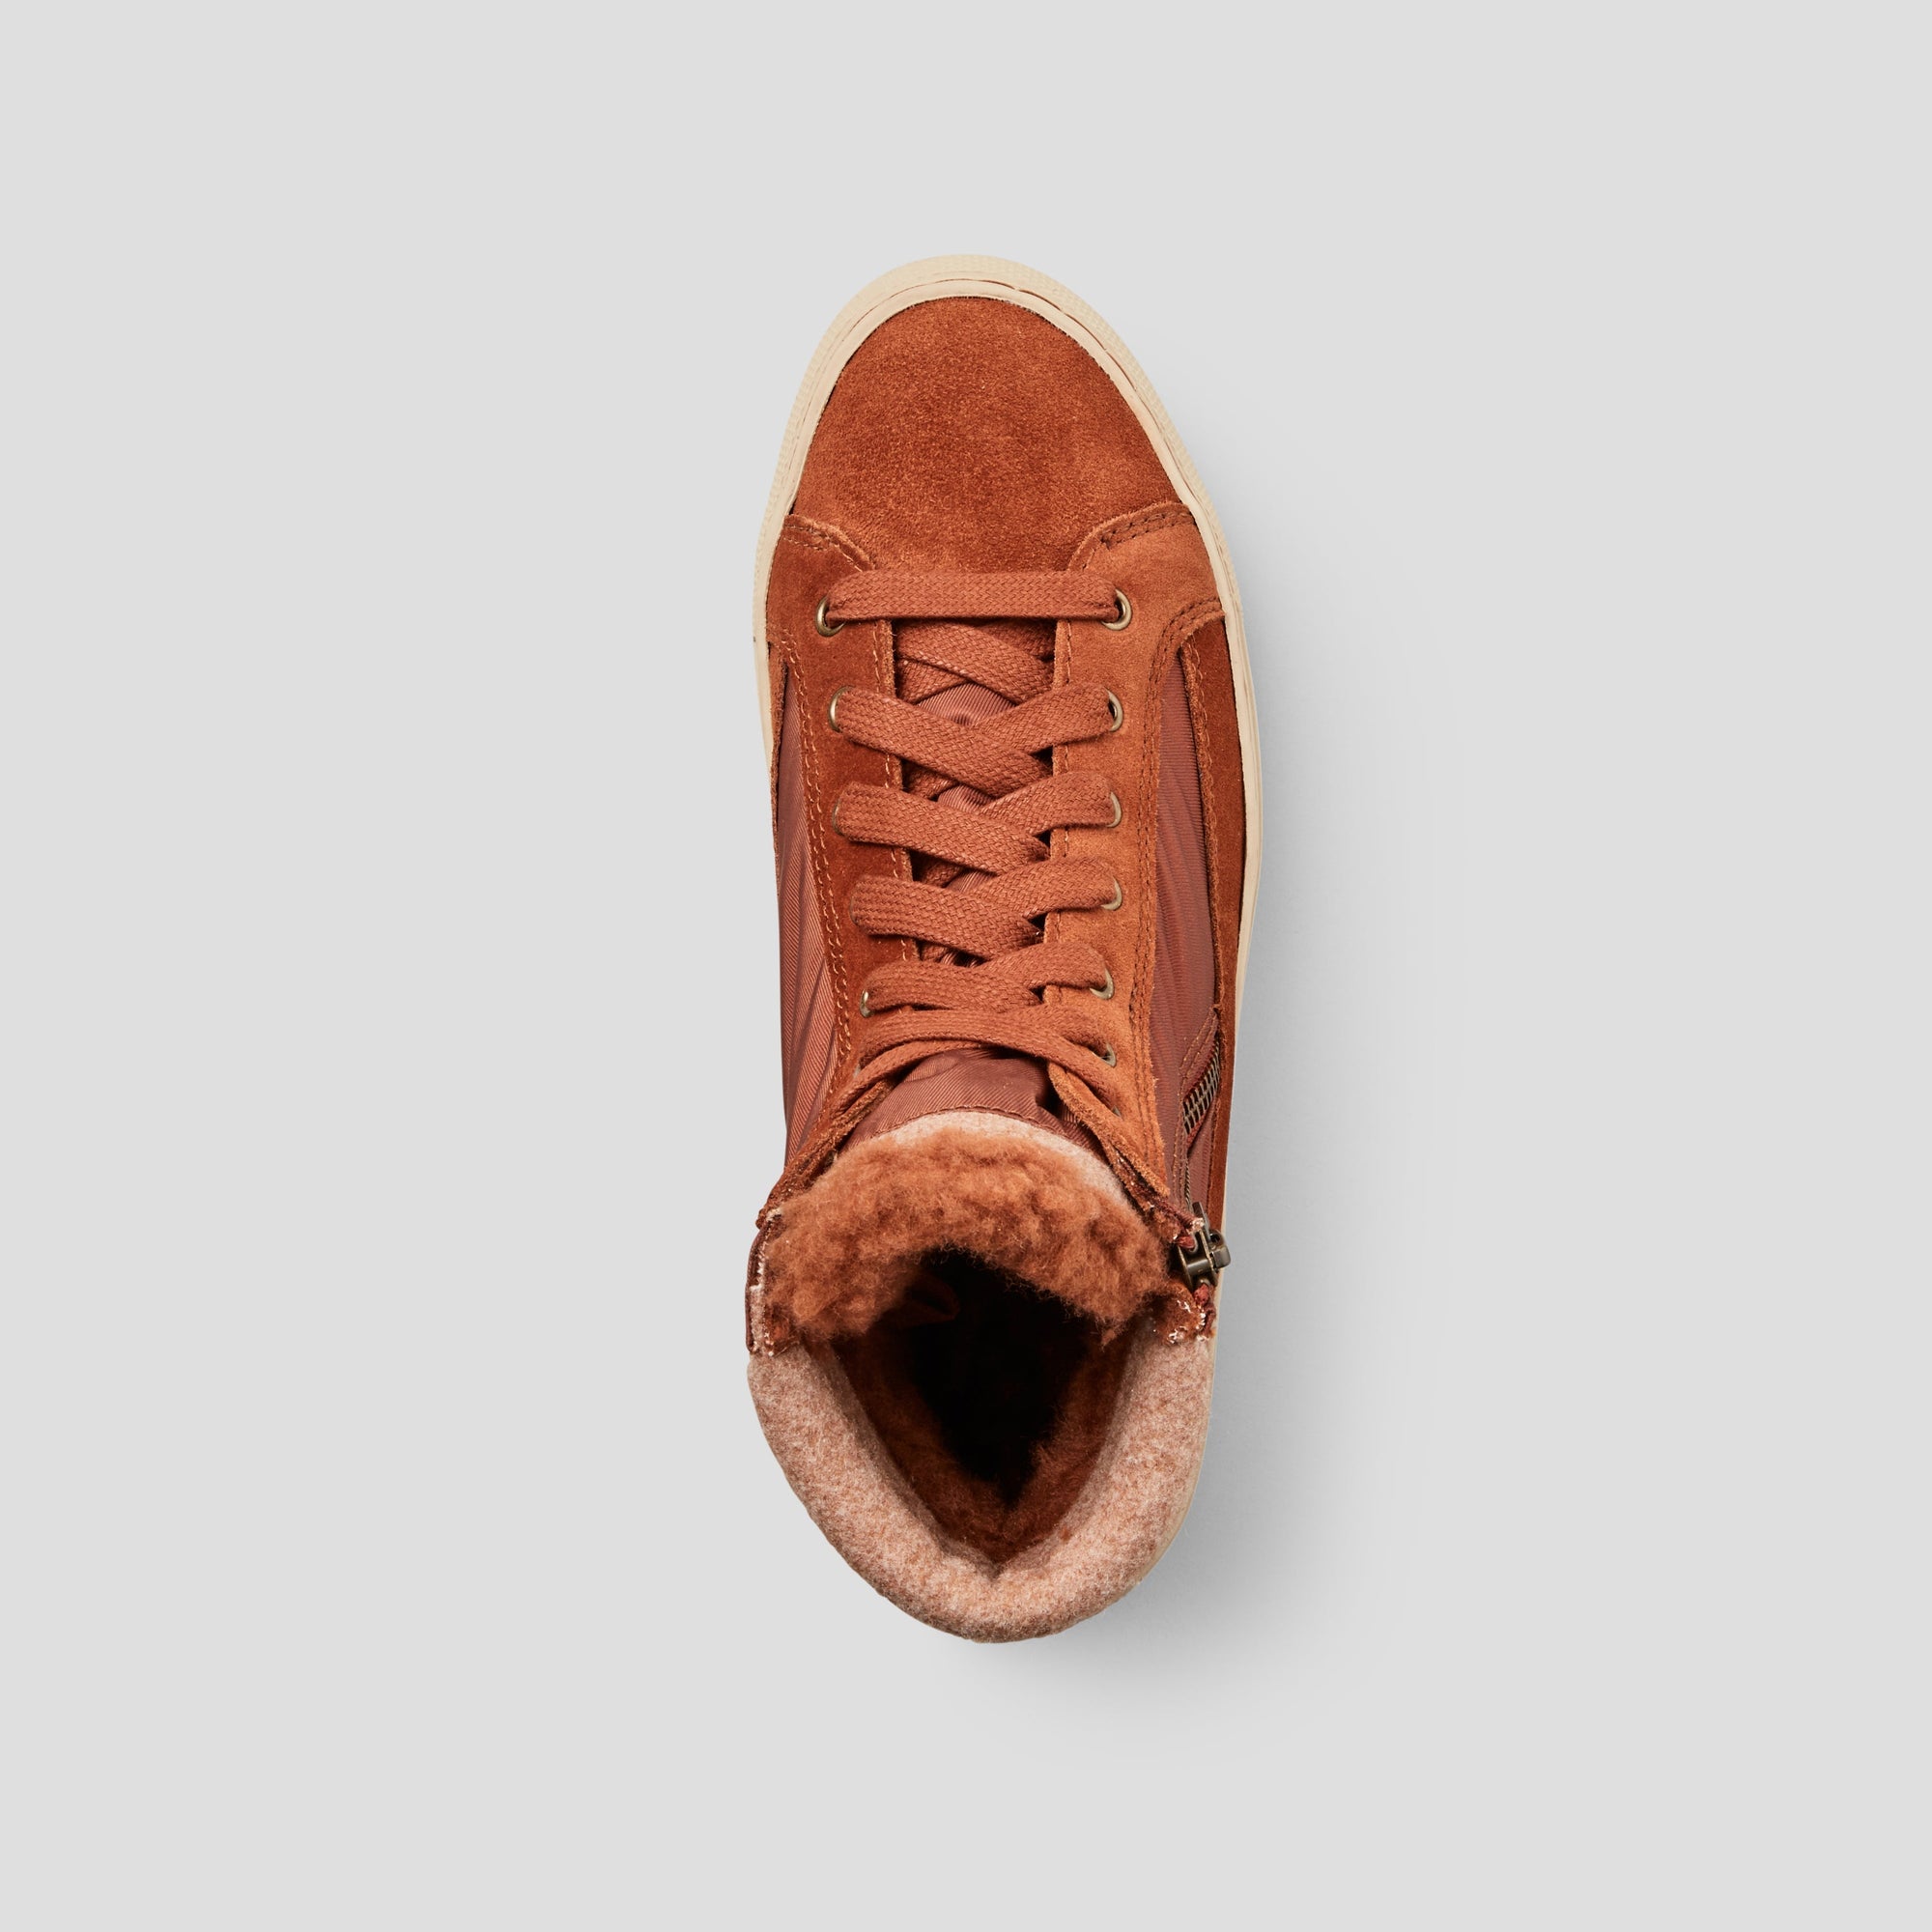 Dax Nylon Waterproof Winter Sneaker - Color Tobacco